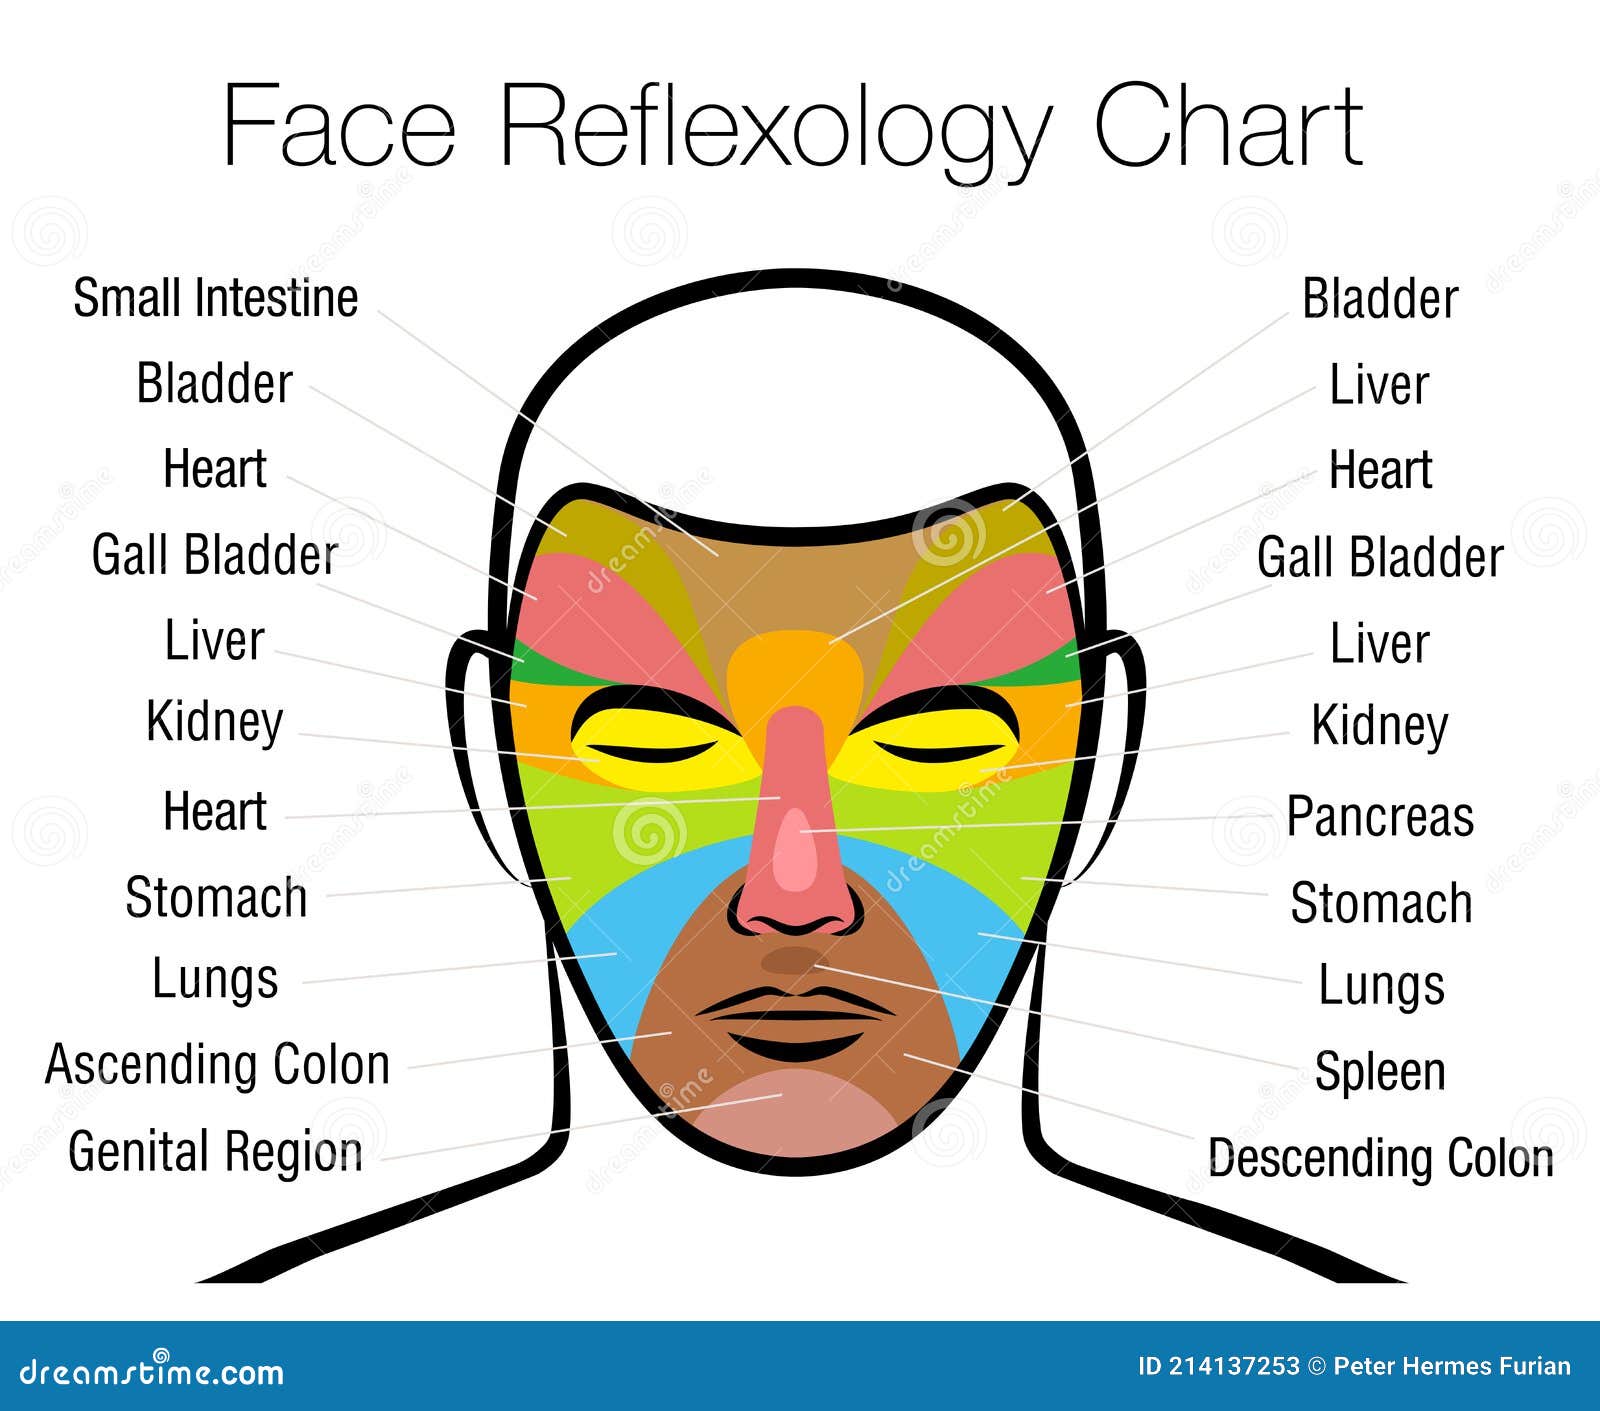 Face Reflexology Chart Mapping Massage Areas Internal Organs Body Parts